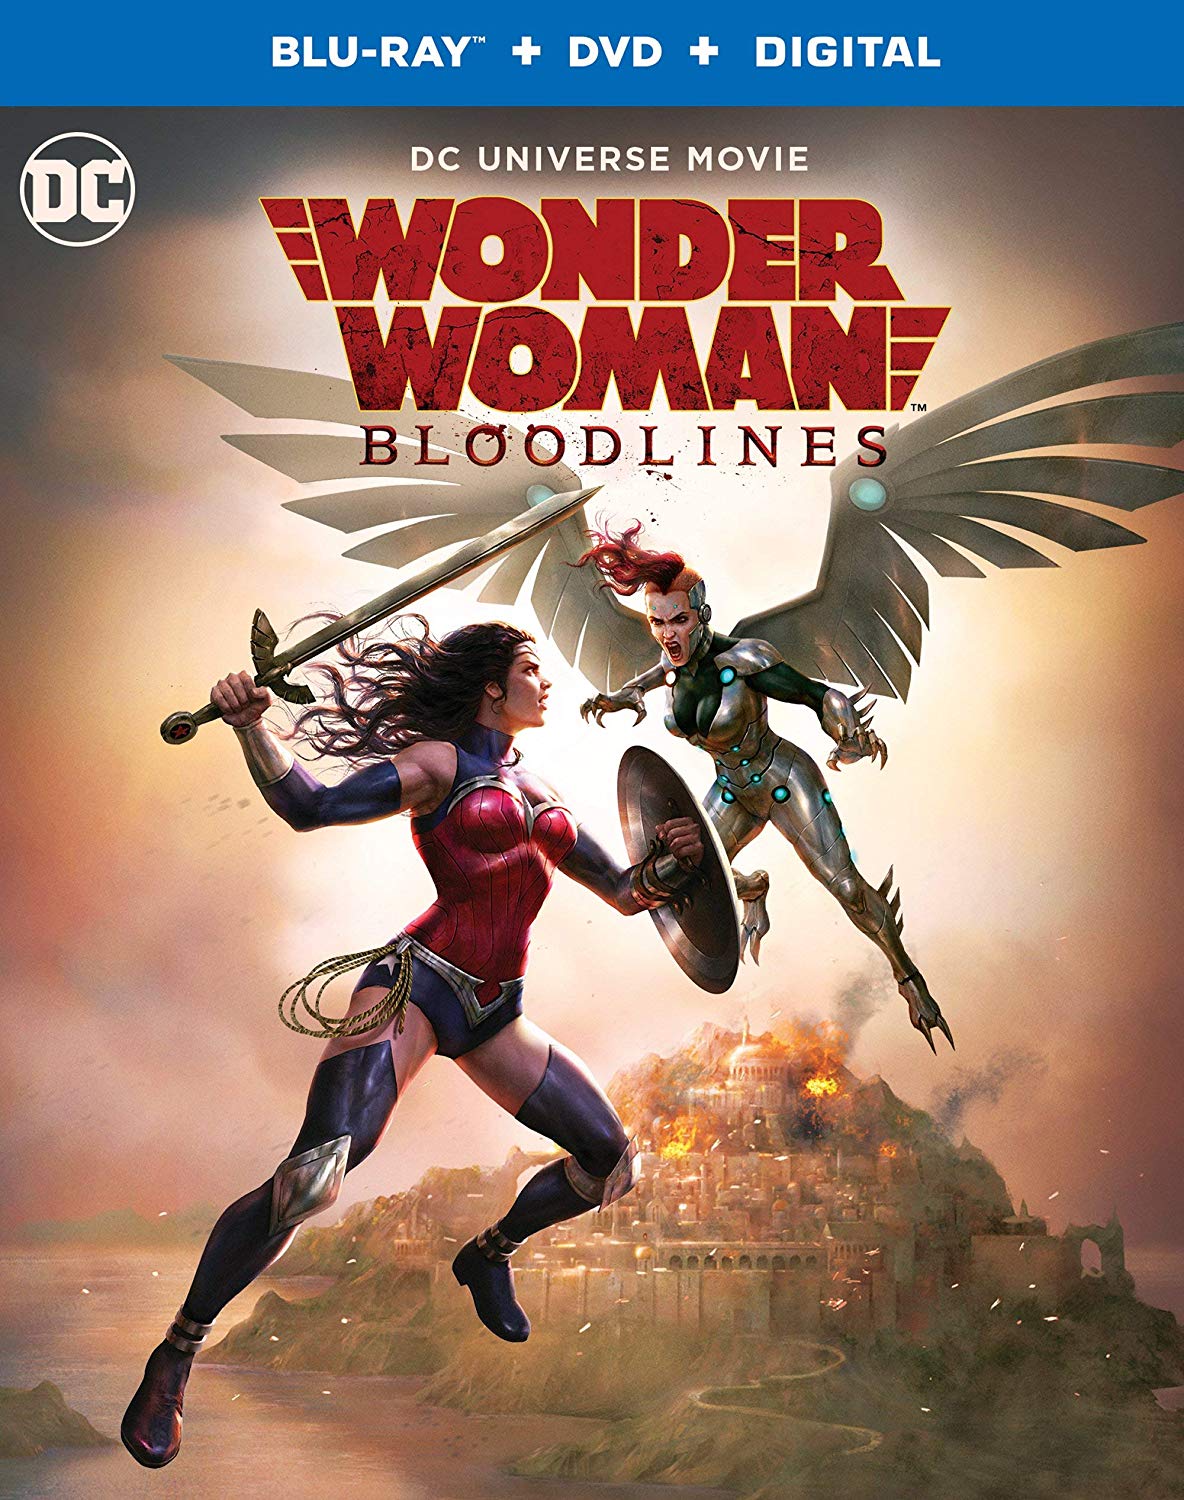 Wonder Woman Bloodlines Blu-Ray DVD